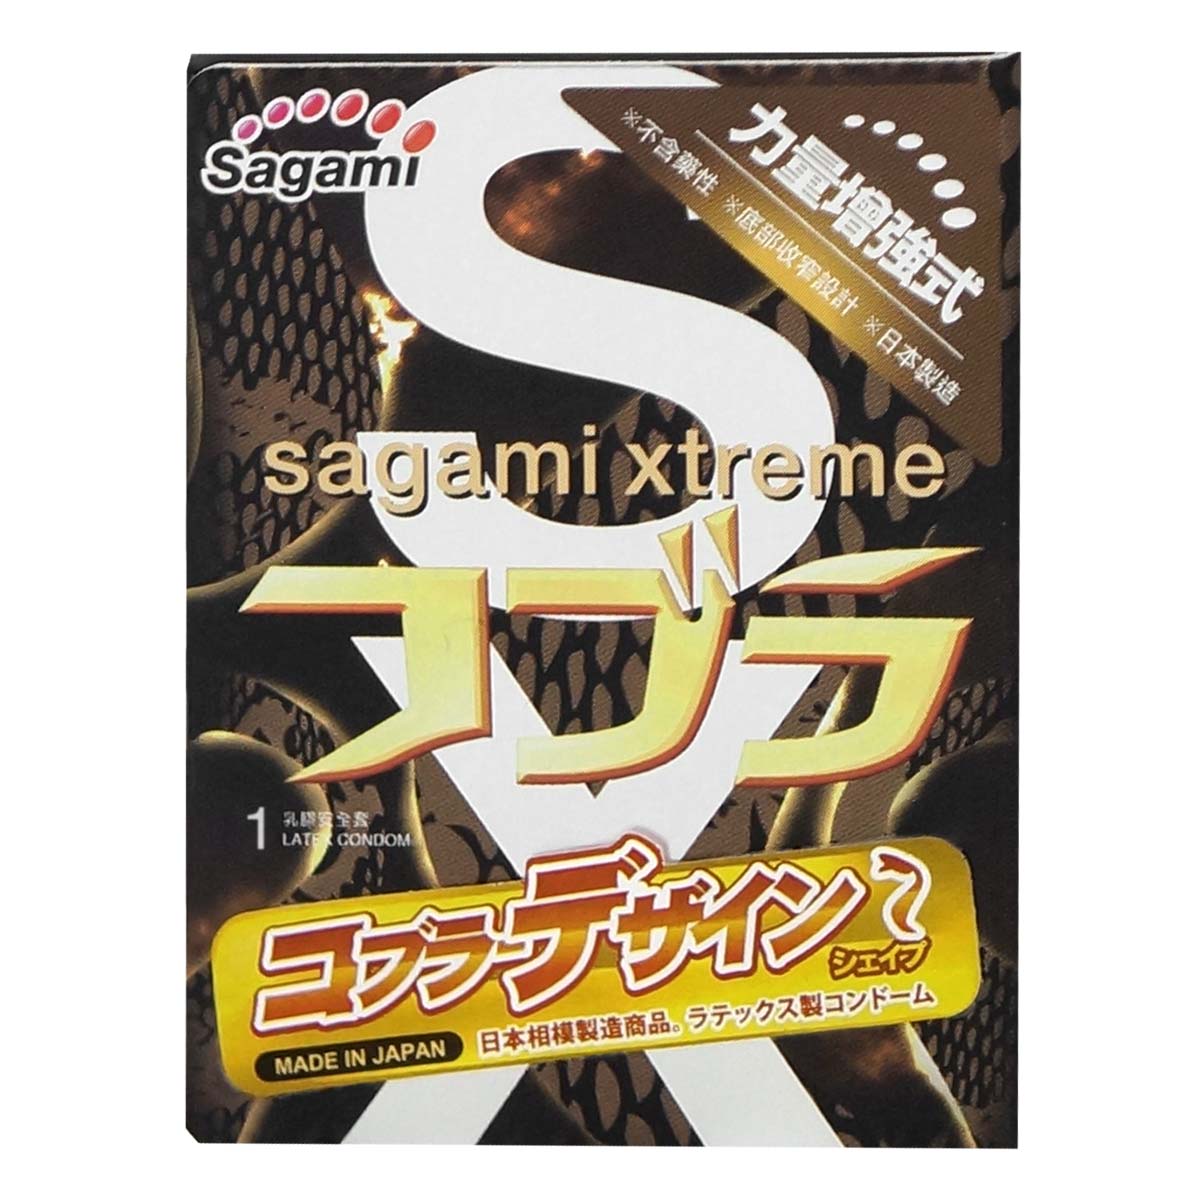 Sagami Xtreme Cobra 53/44mm 1's Pack Latex Condom-p_2